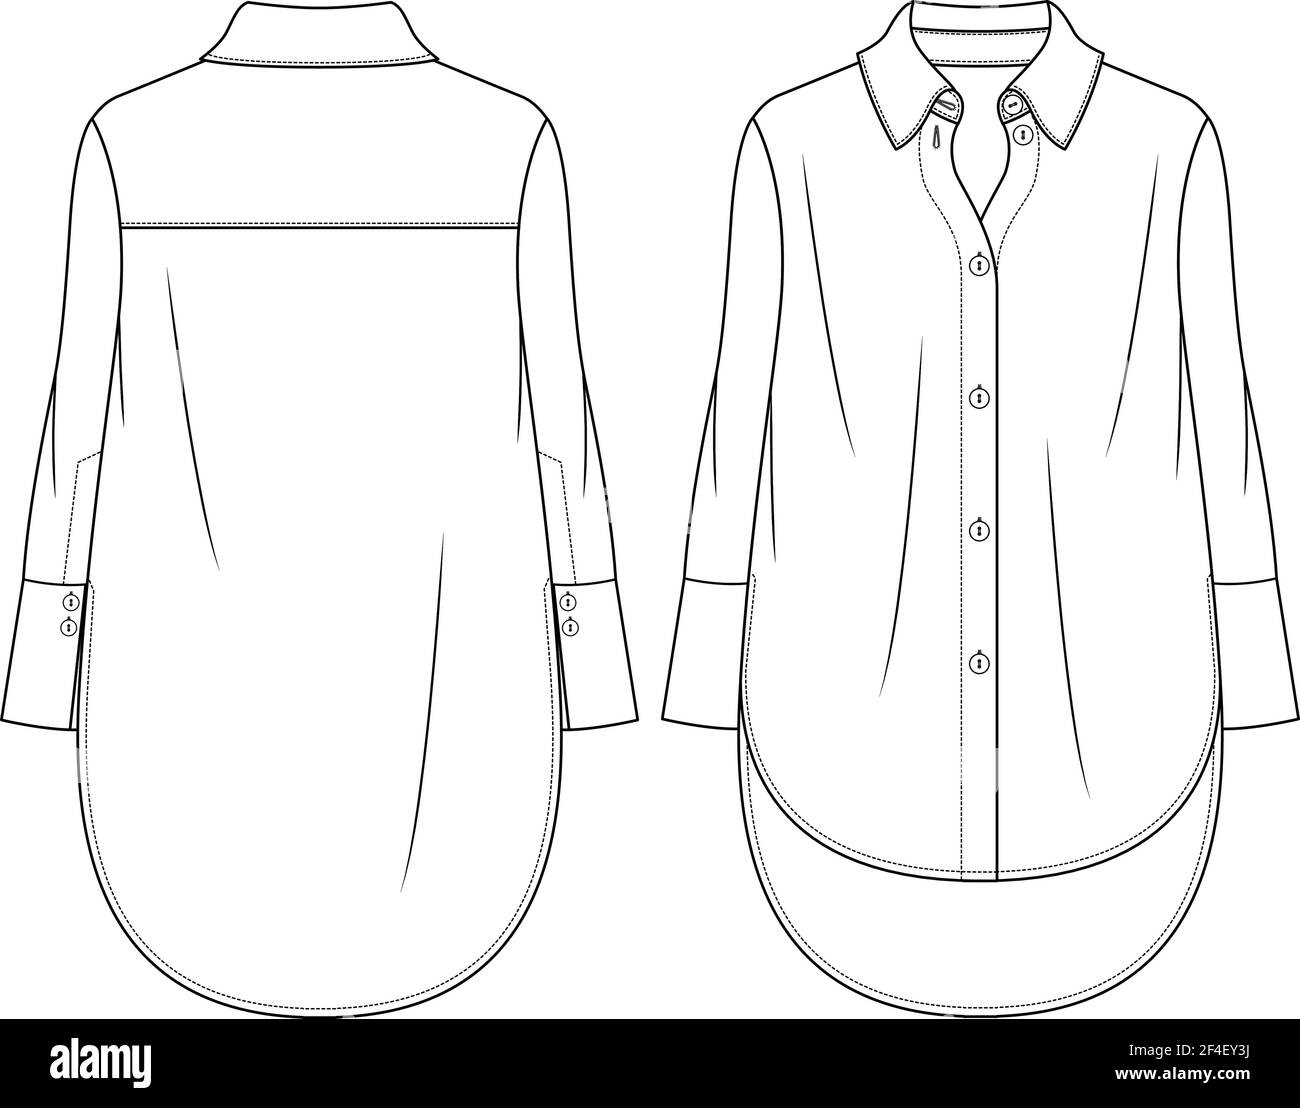 Mujer High Low Blusa diseño plano de moda. Ilustración técnica de moda.  Manguitos anchos Imagen Vector de stock - Alamy